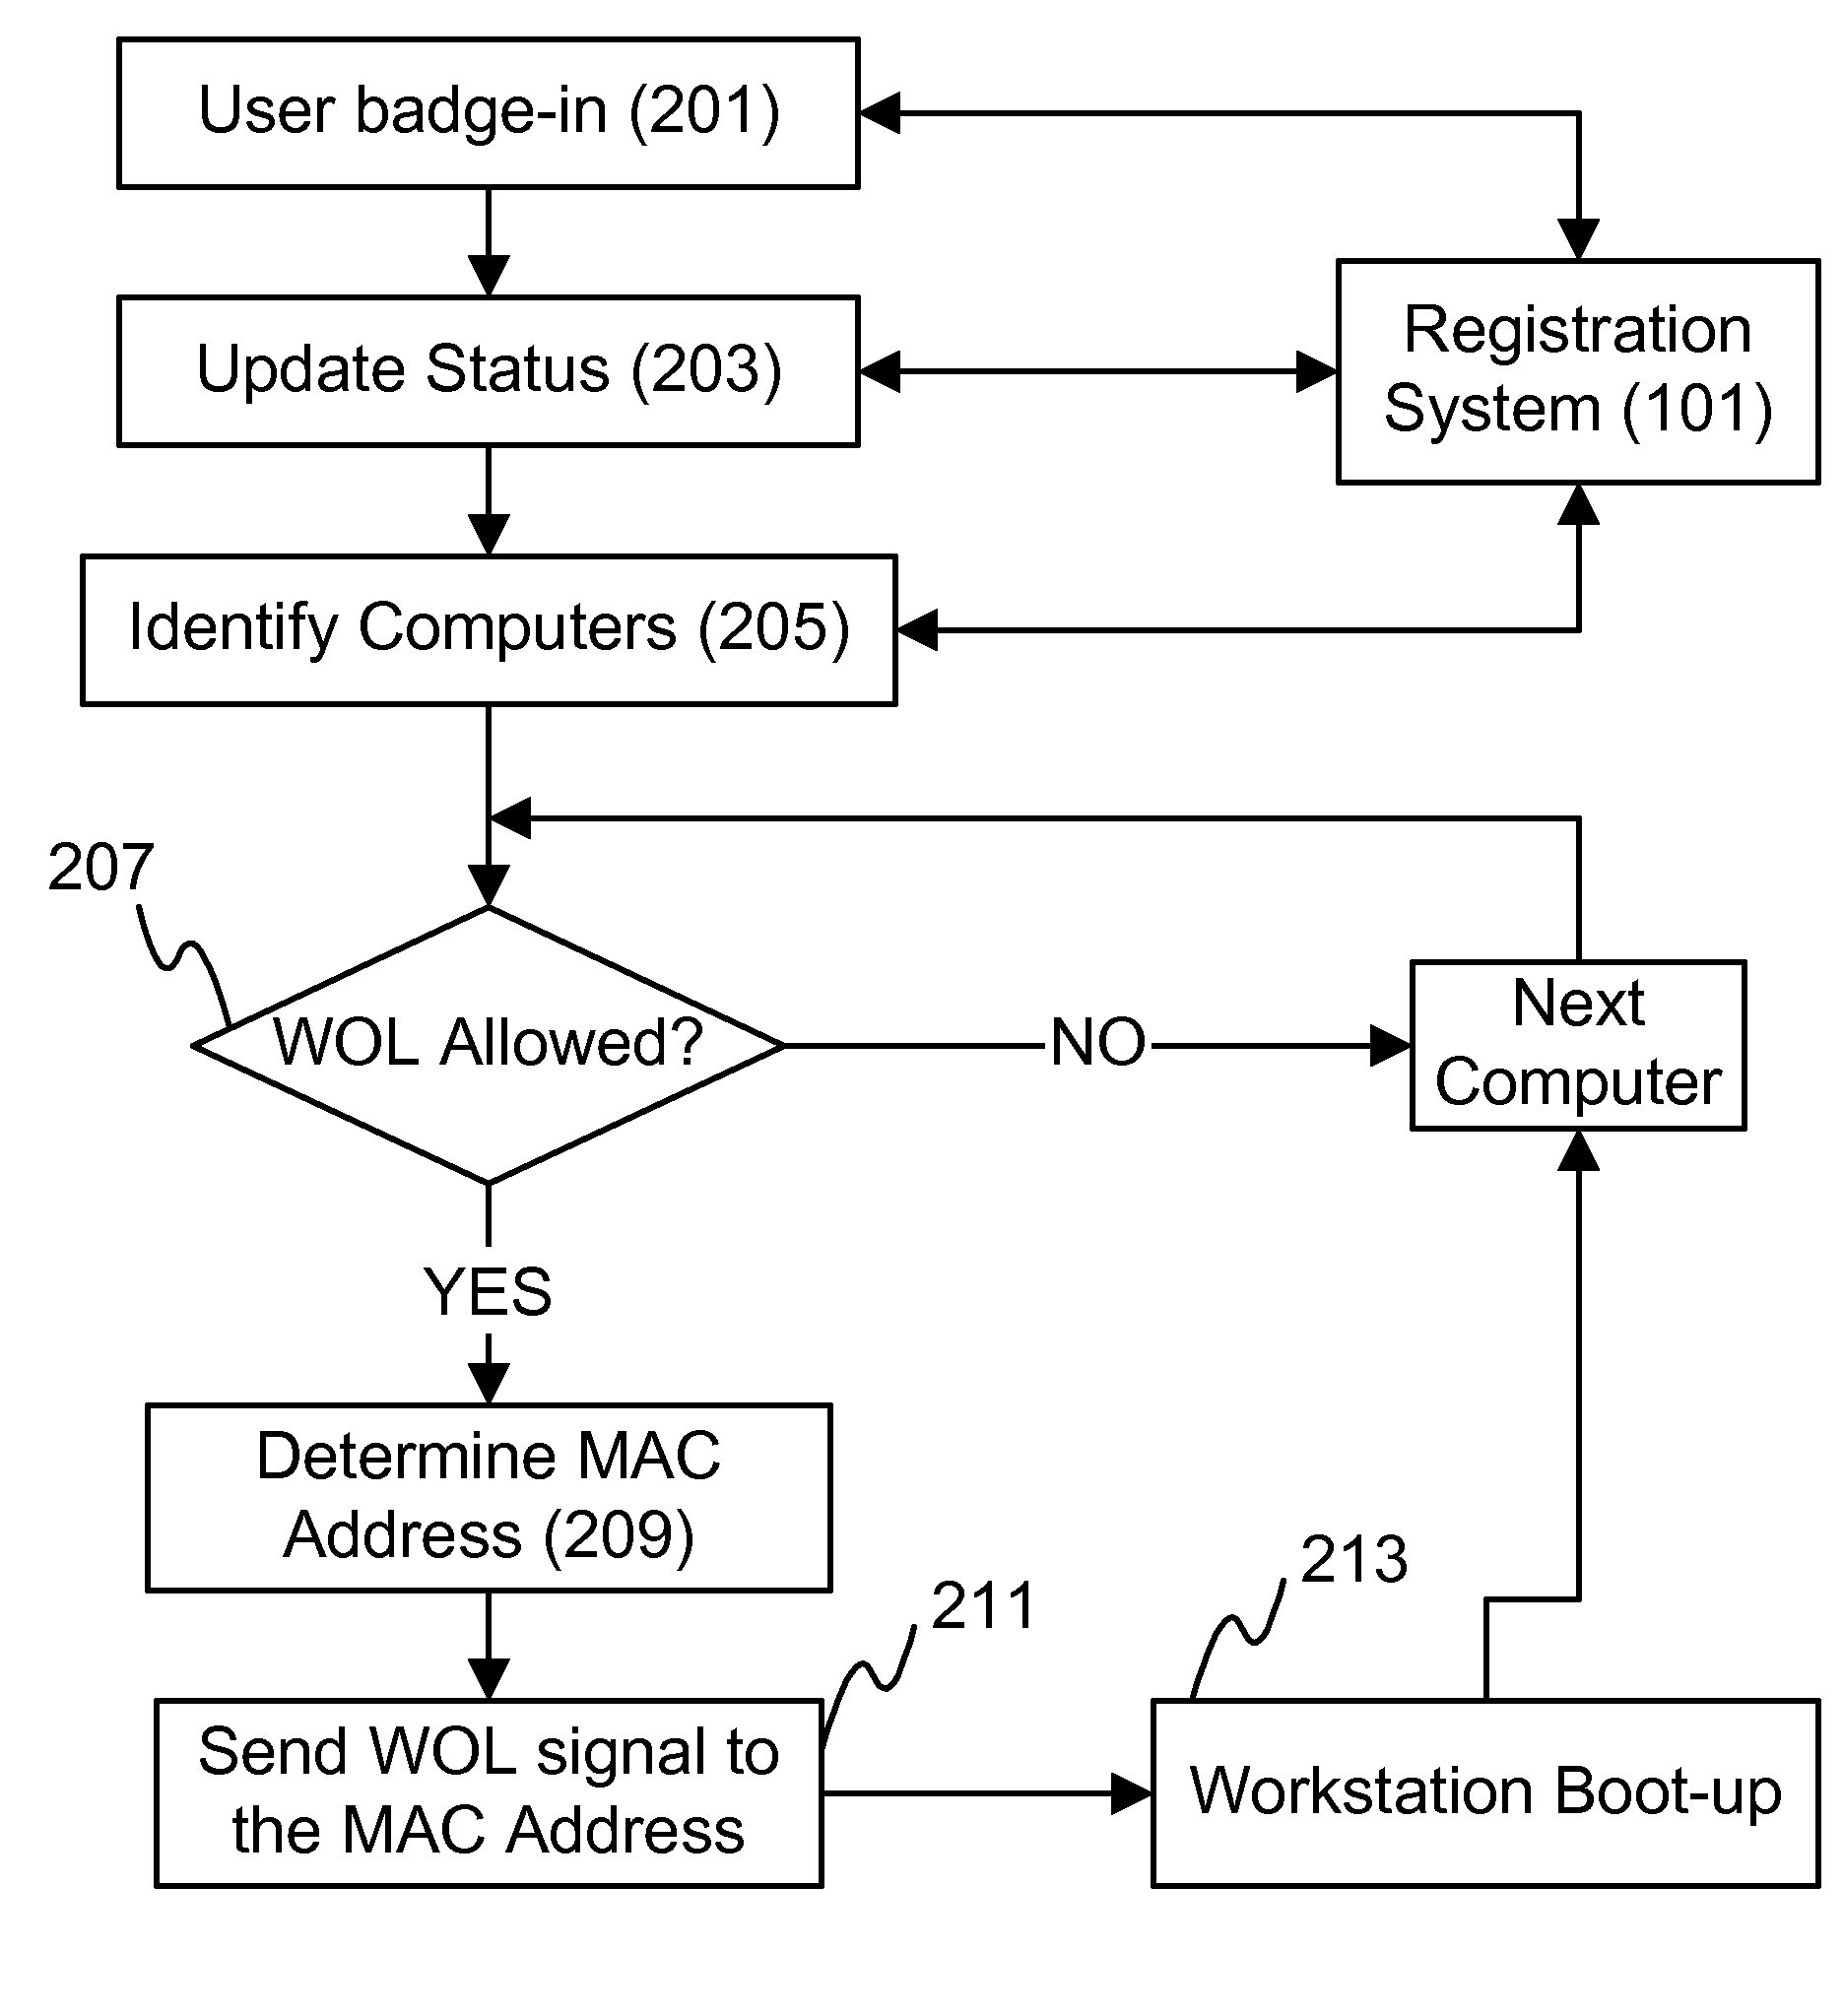 Integrating workstation computer with badging system